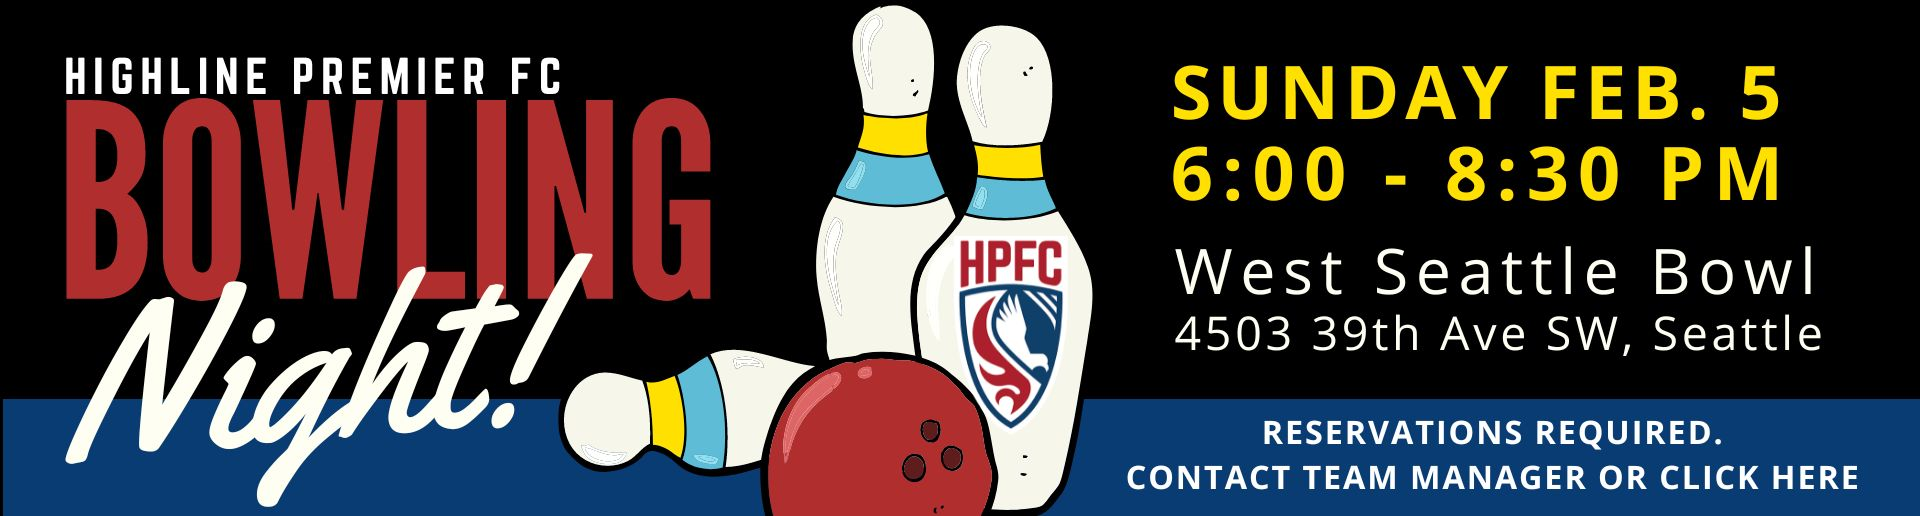 HPFC Community Event: Bowling Night